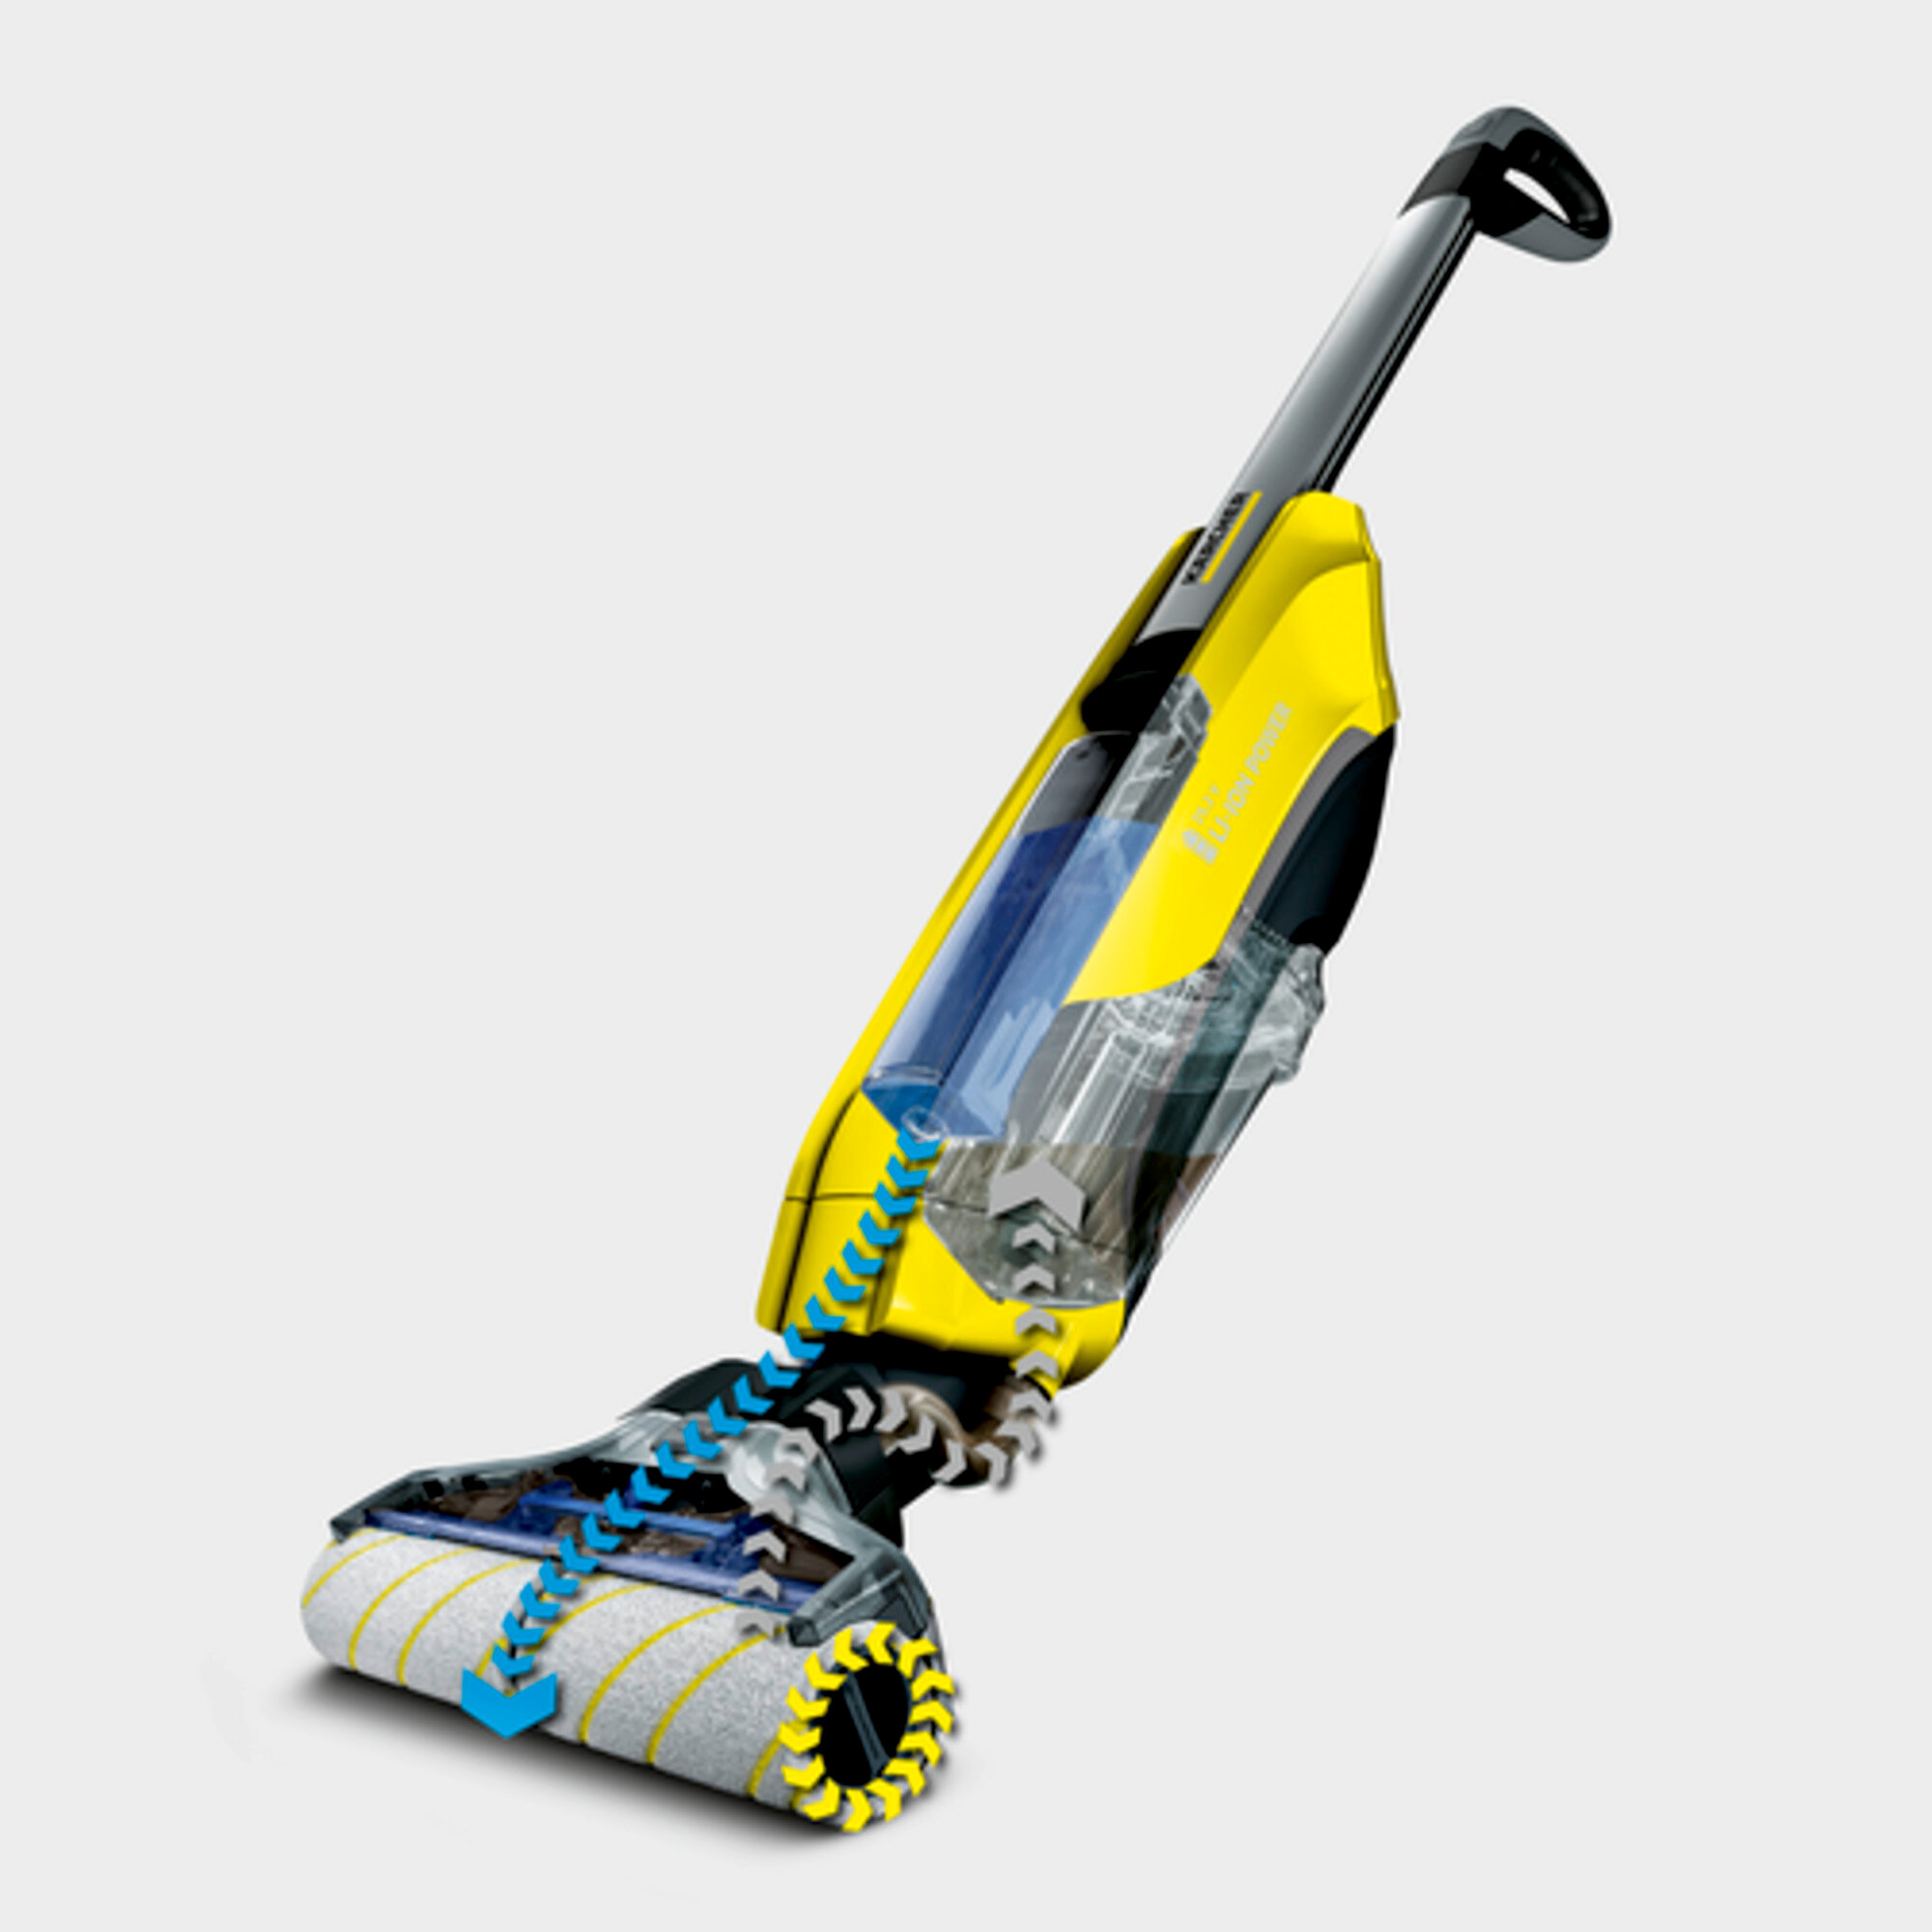 Haudang Hard Floor Sweeper Cleaner Roller Brush Main Brush for KARCHER FC3 FC5 Cordless Vacuum,3 Pair